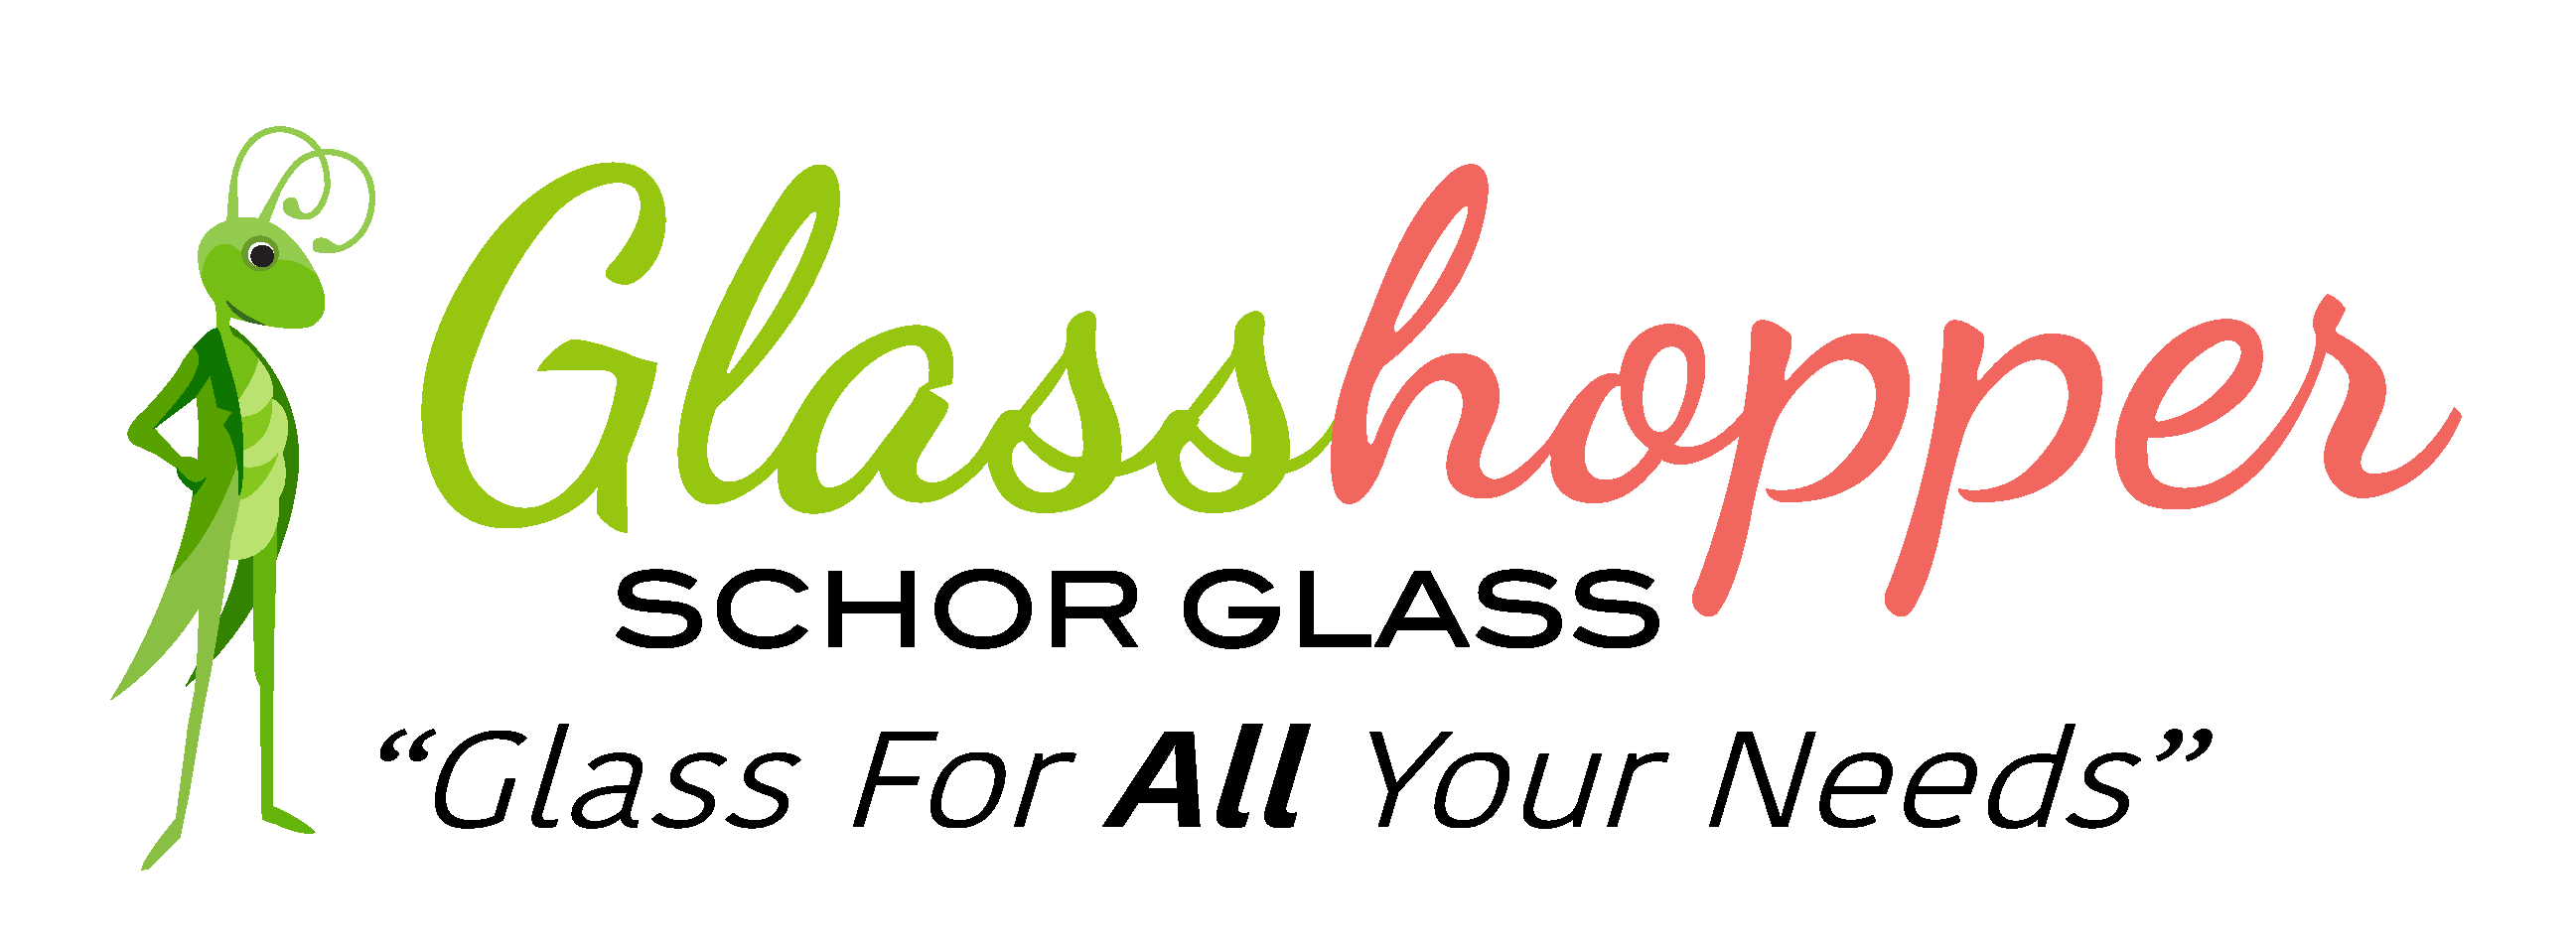 Glasshopper Logo